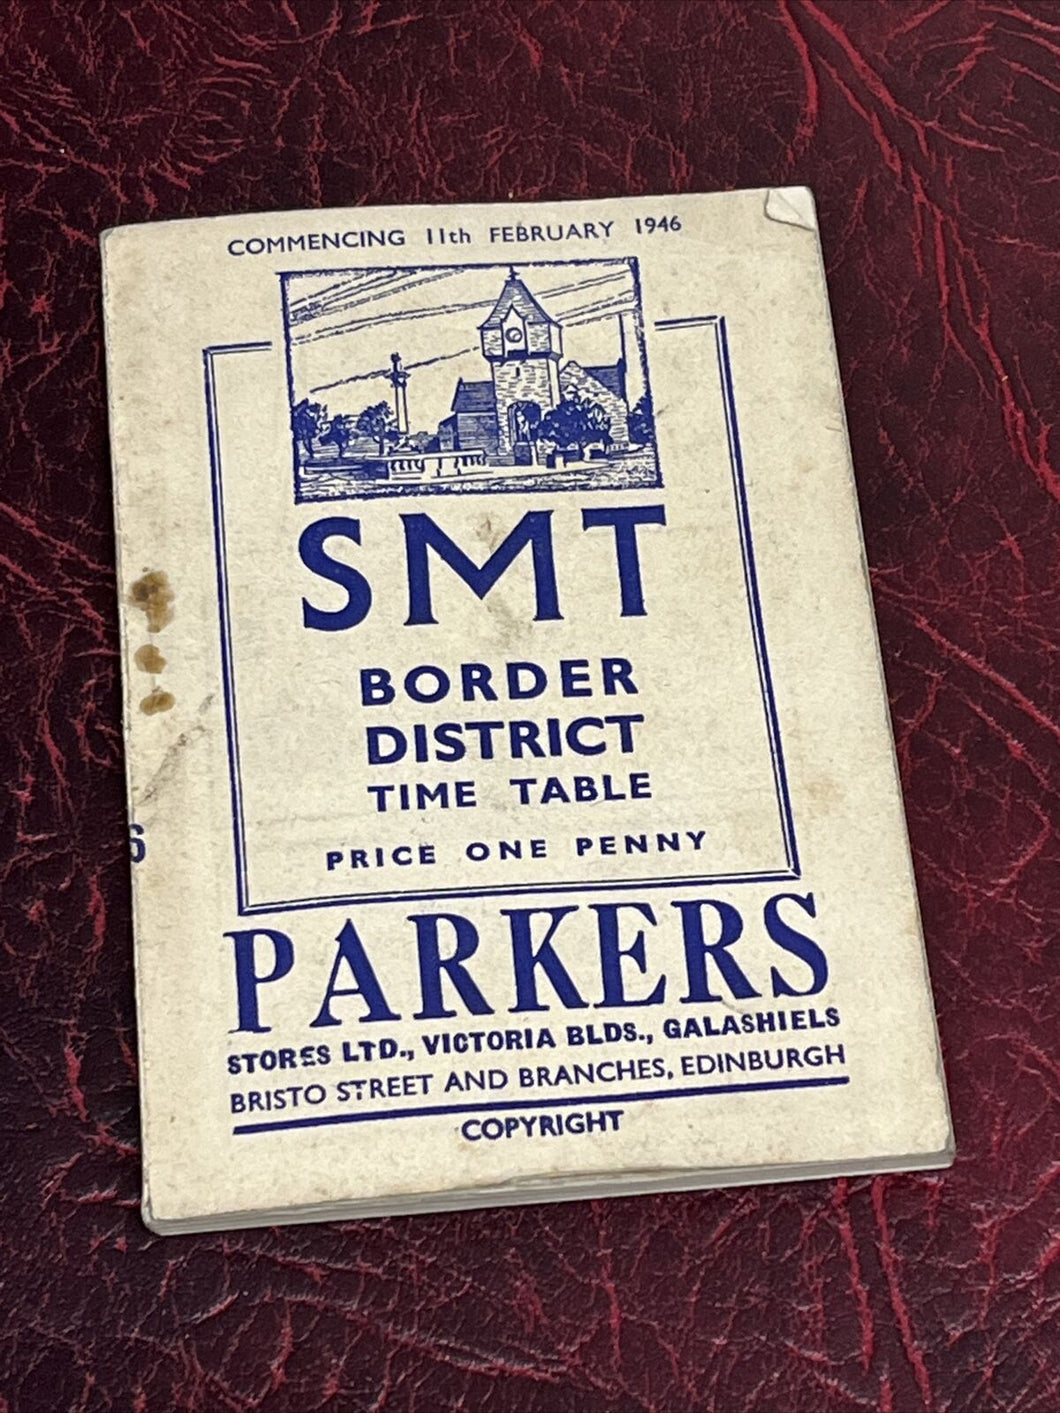 SMT BORDER DISTRICT Railway Timetable 1946